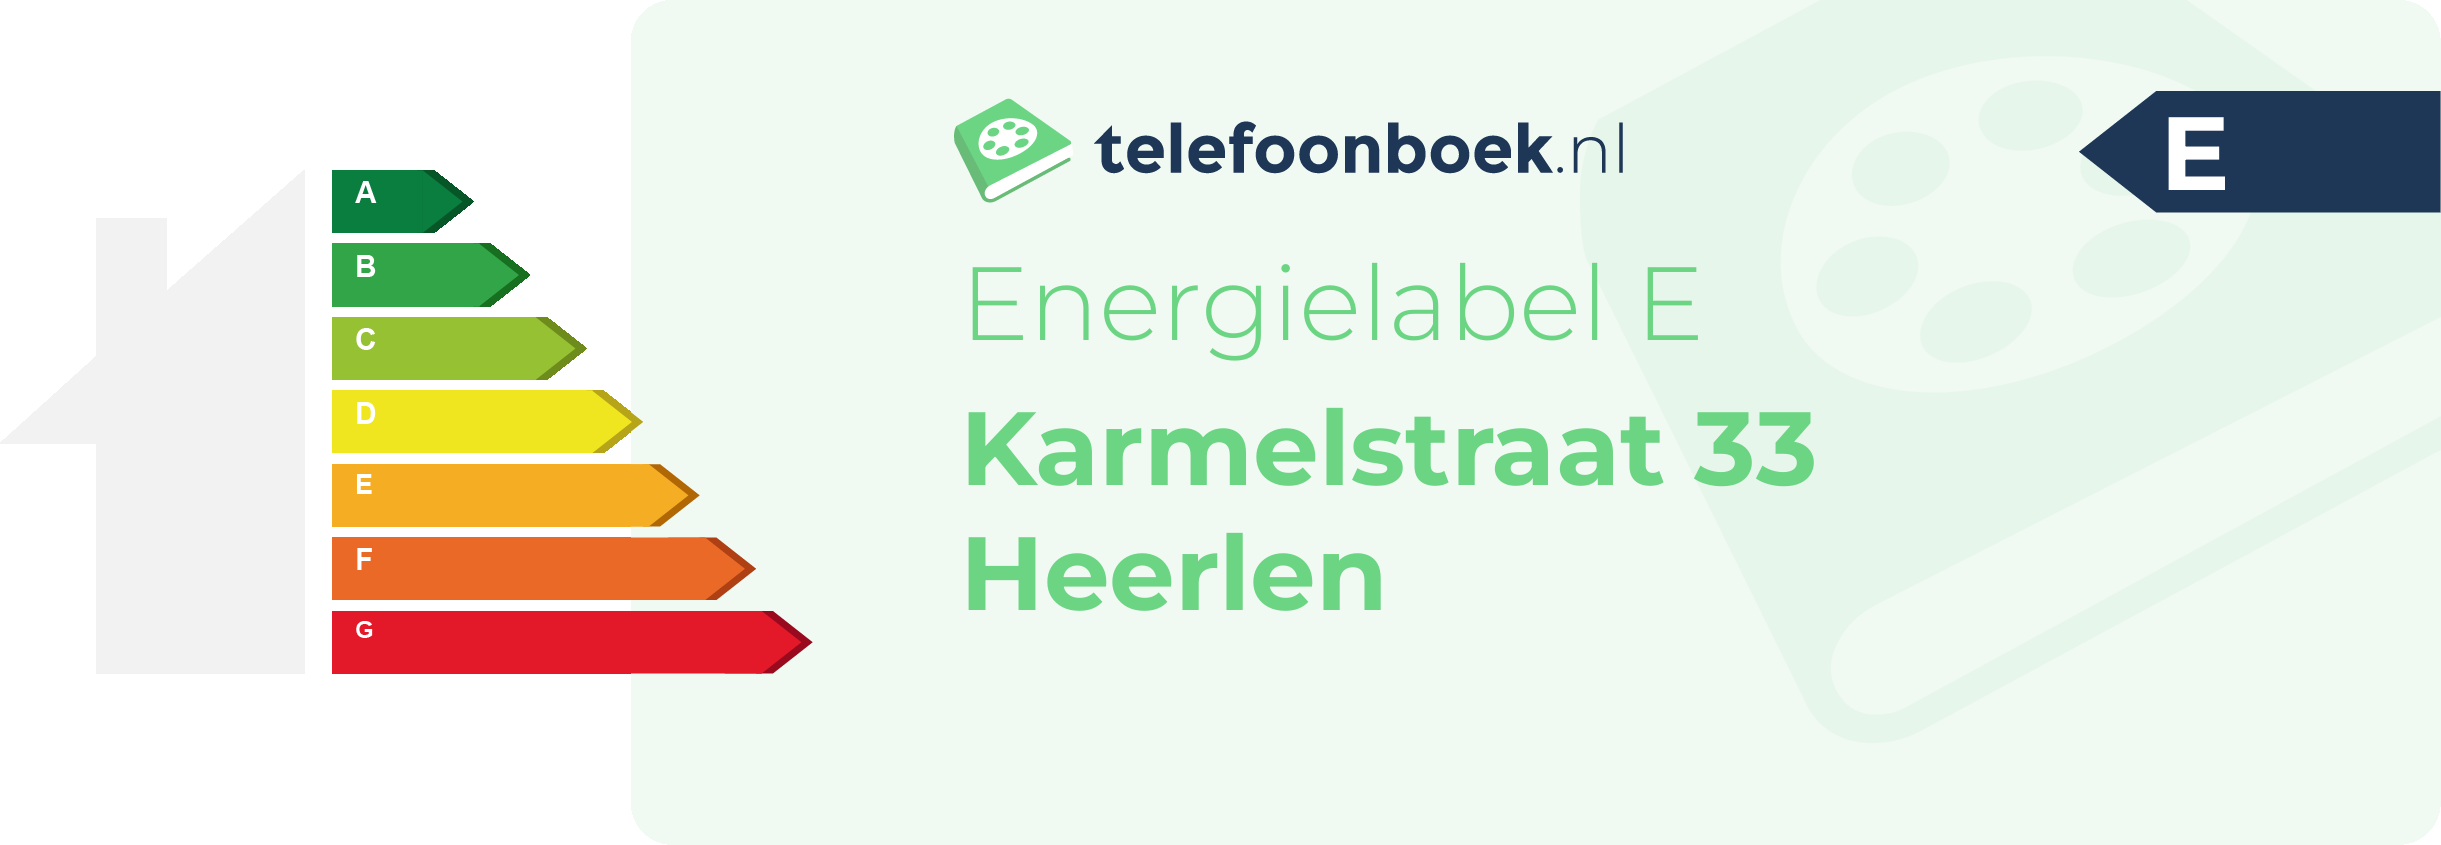 Energielabel Karmelstraat 33 Heerlen